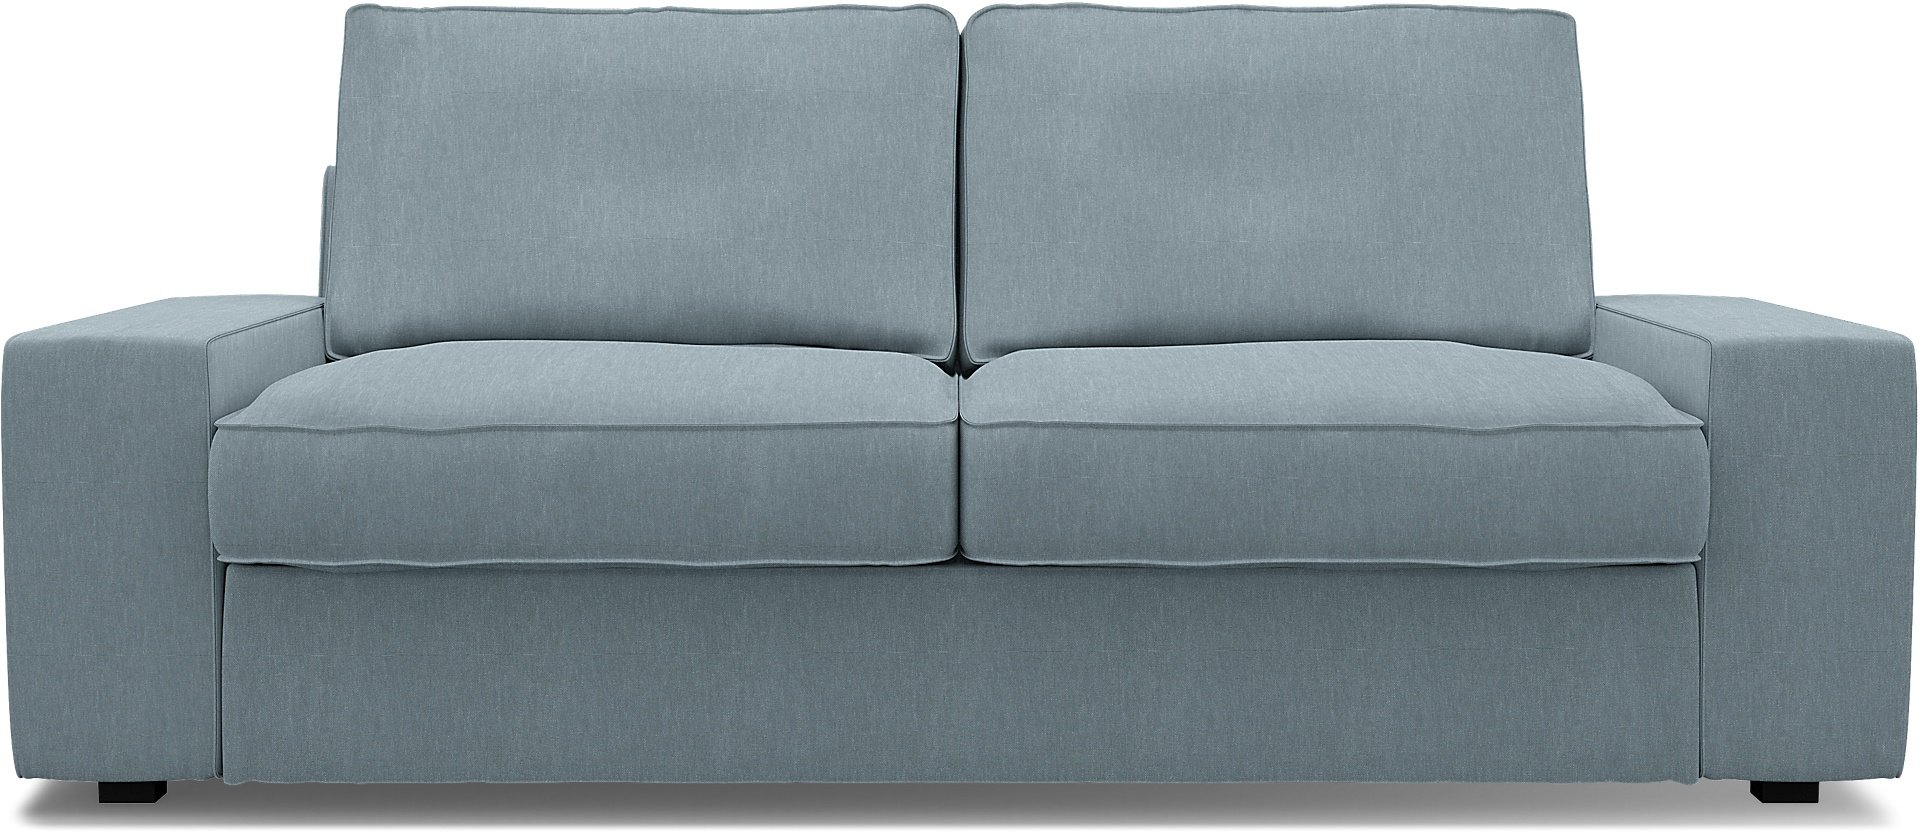 IKEA - Kivik 2 Seater Sofa Cover, Dusty Blue, Linen - Bemz